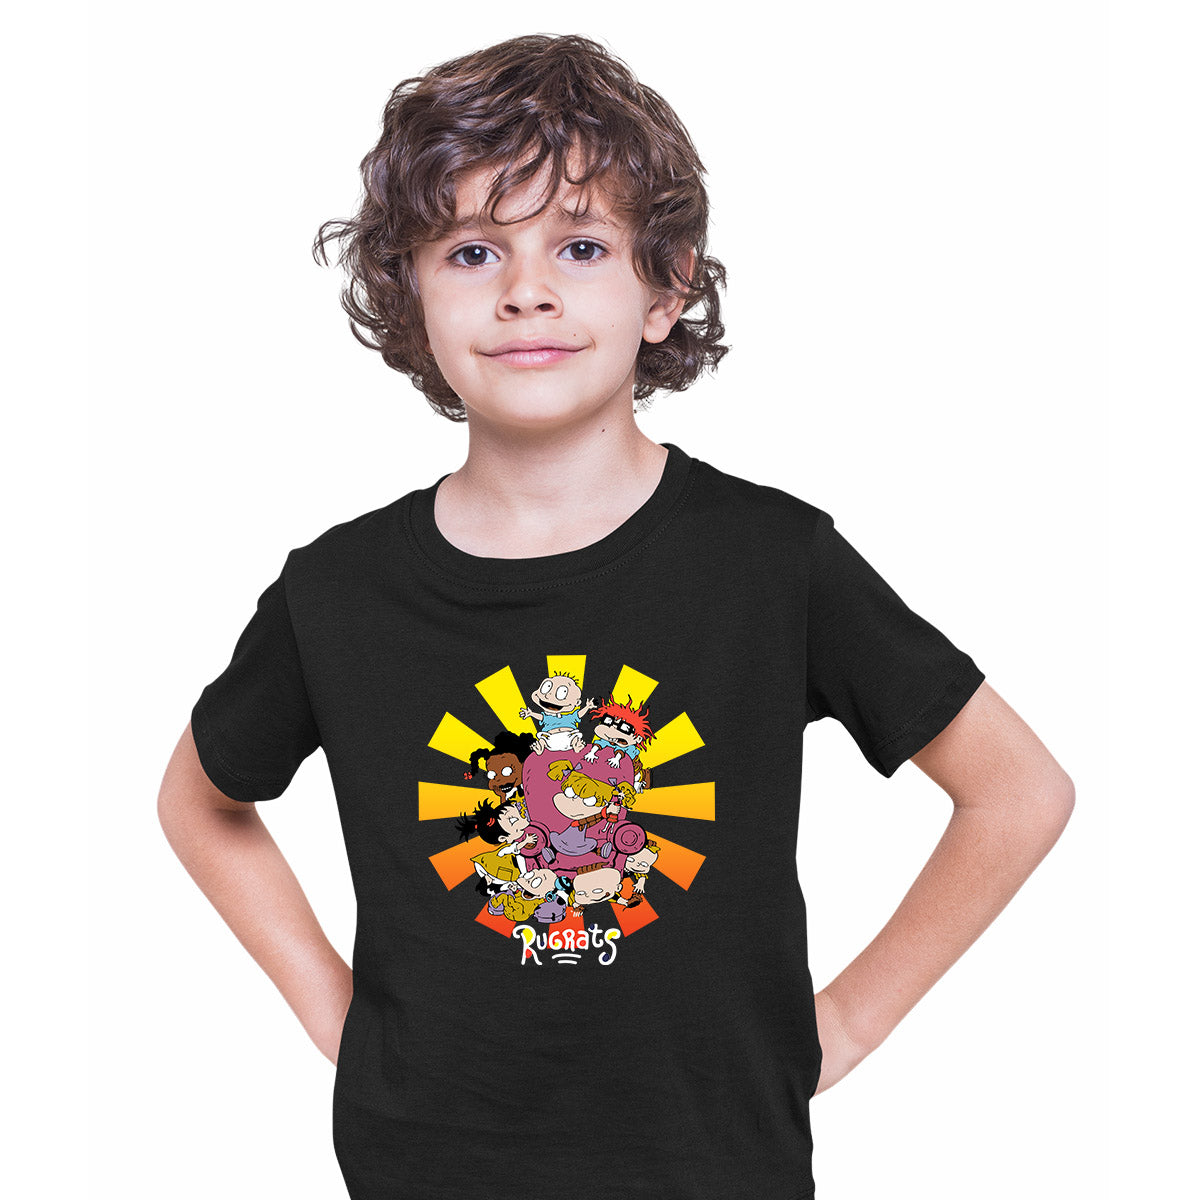 Rugrats Characters Nickelodeon TV Show Kids T-shirt Black